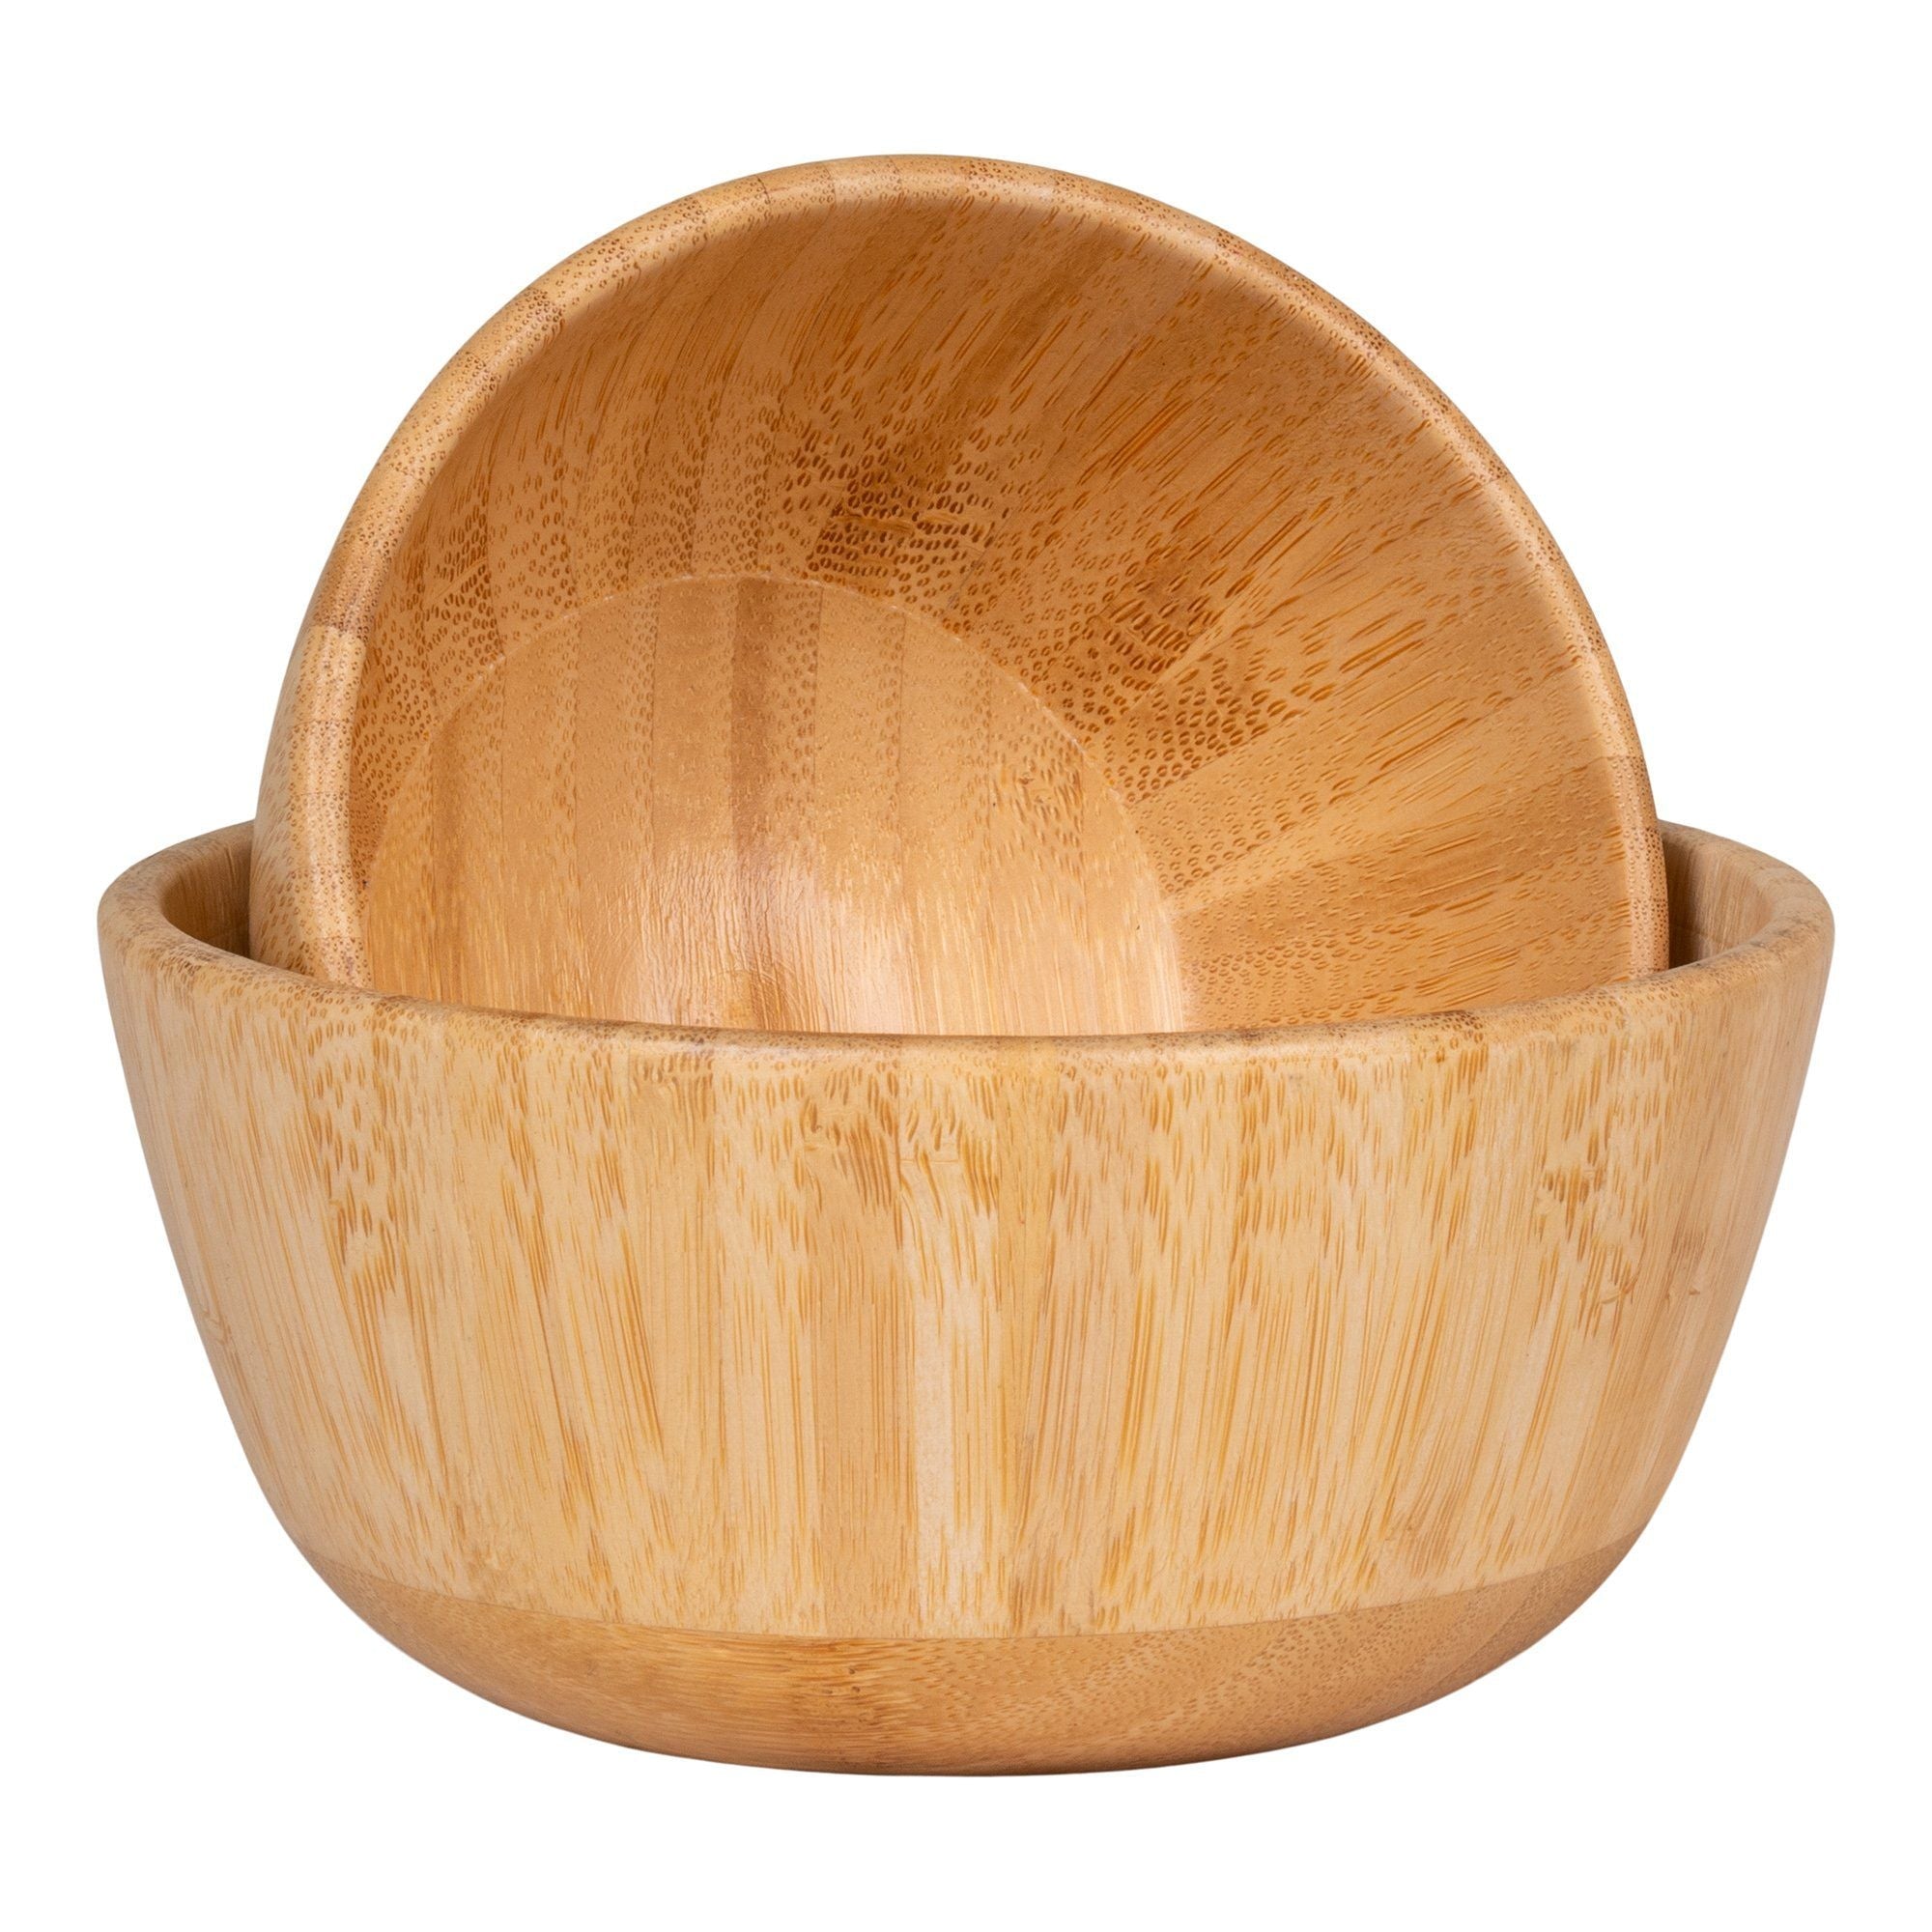 House Nordic Chefalu Bowl